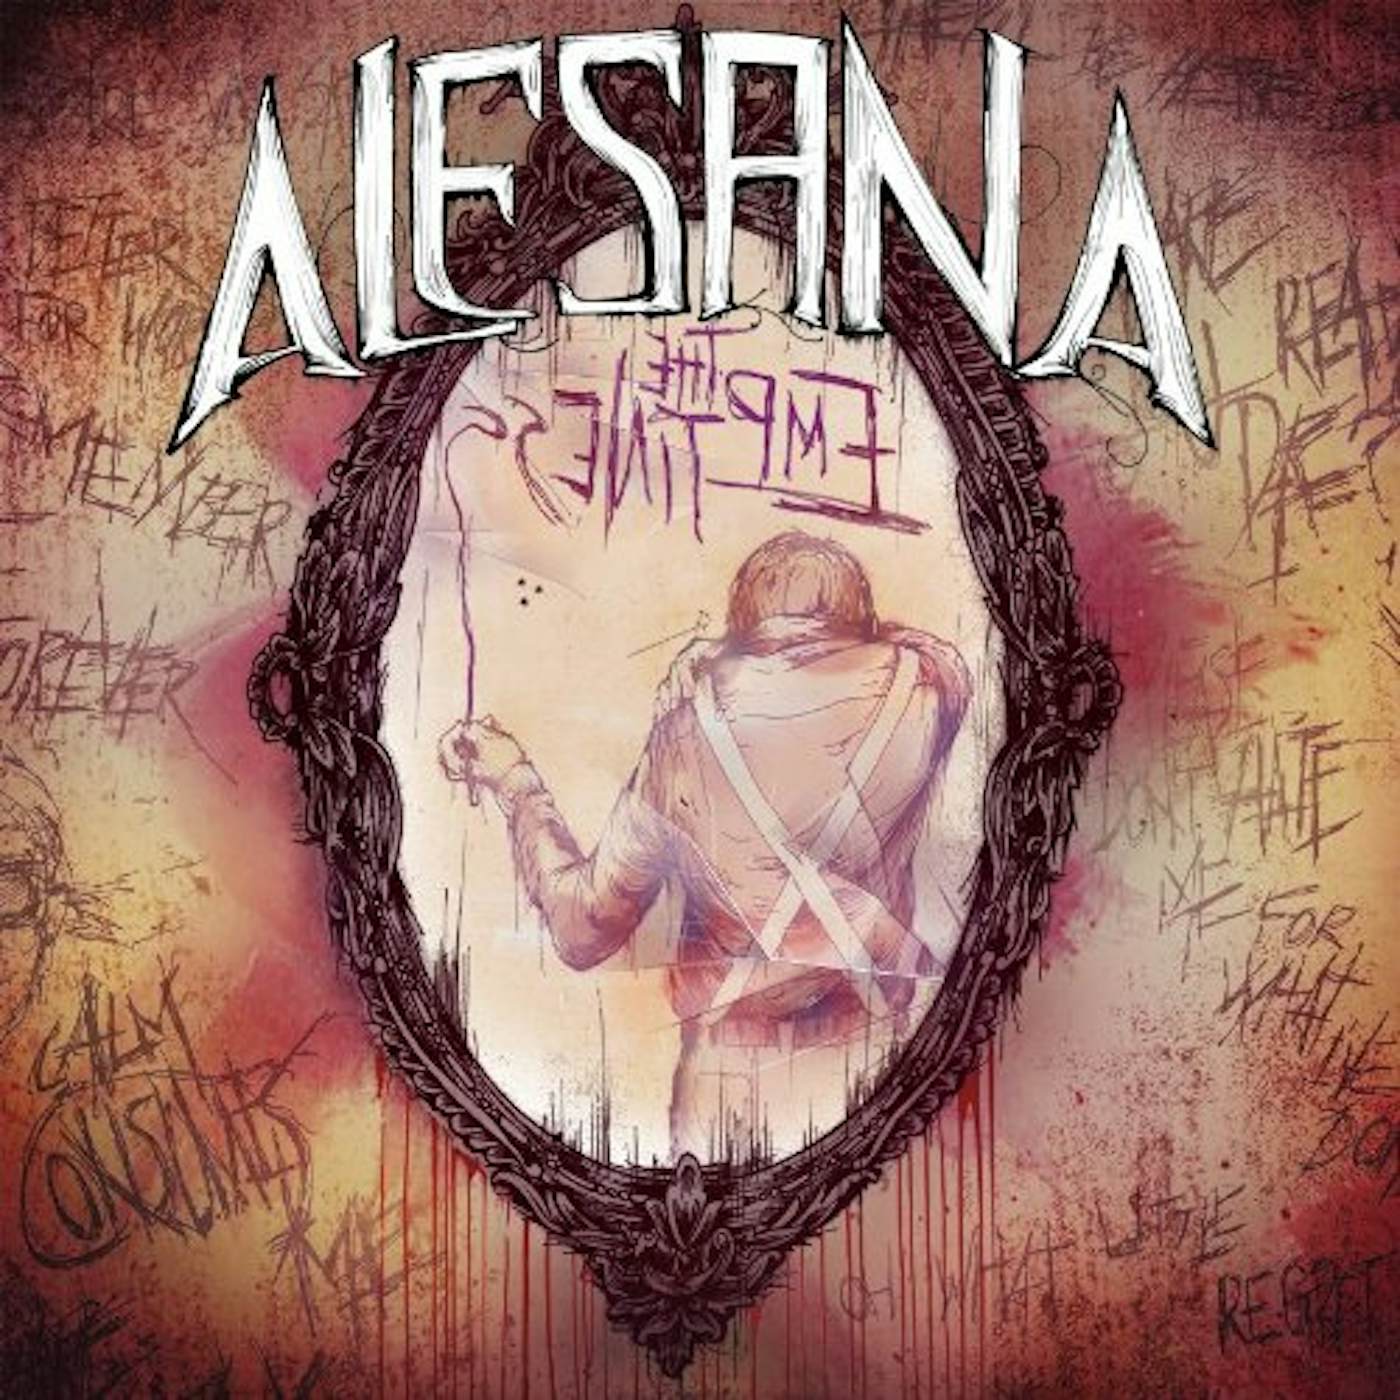 Alesana EMPTINESS CD